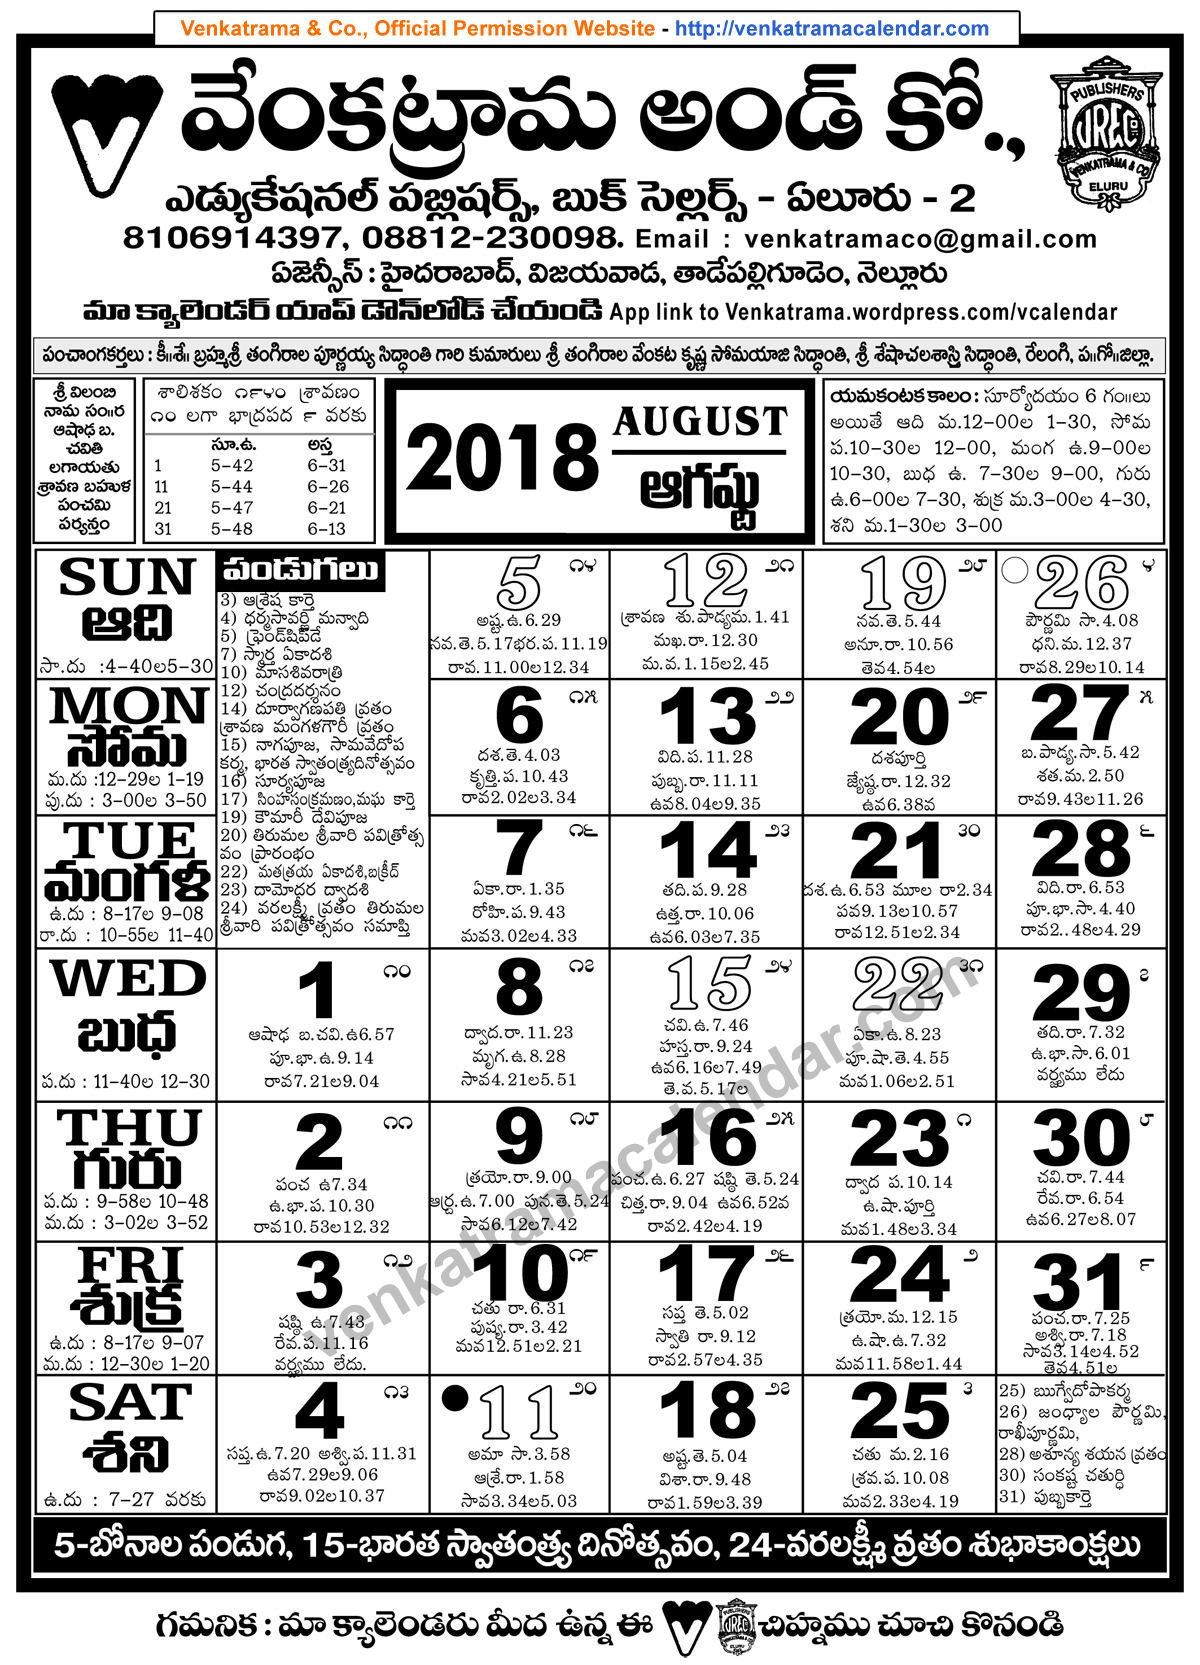 Venkatrama Co 2018 August Telugu Calendar Festivals & Holidays